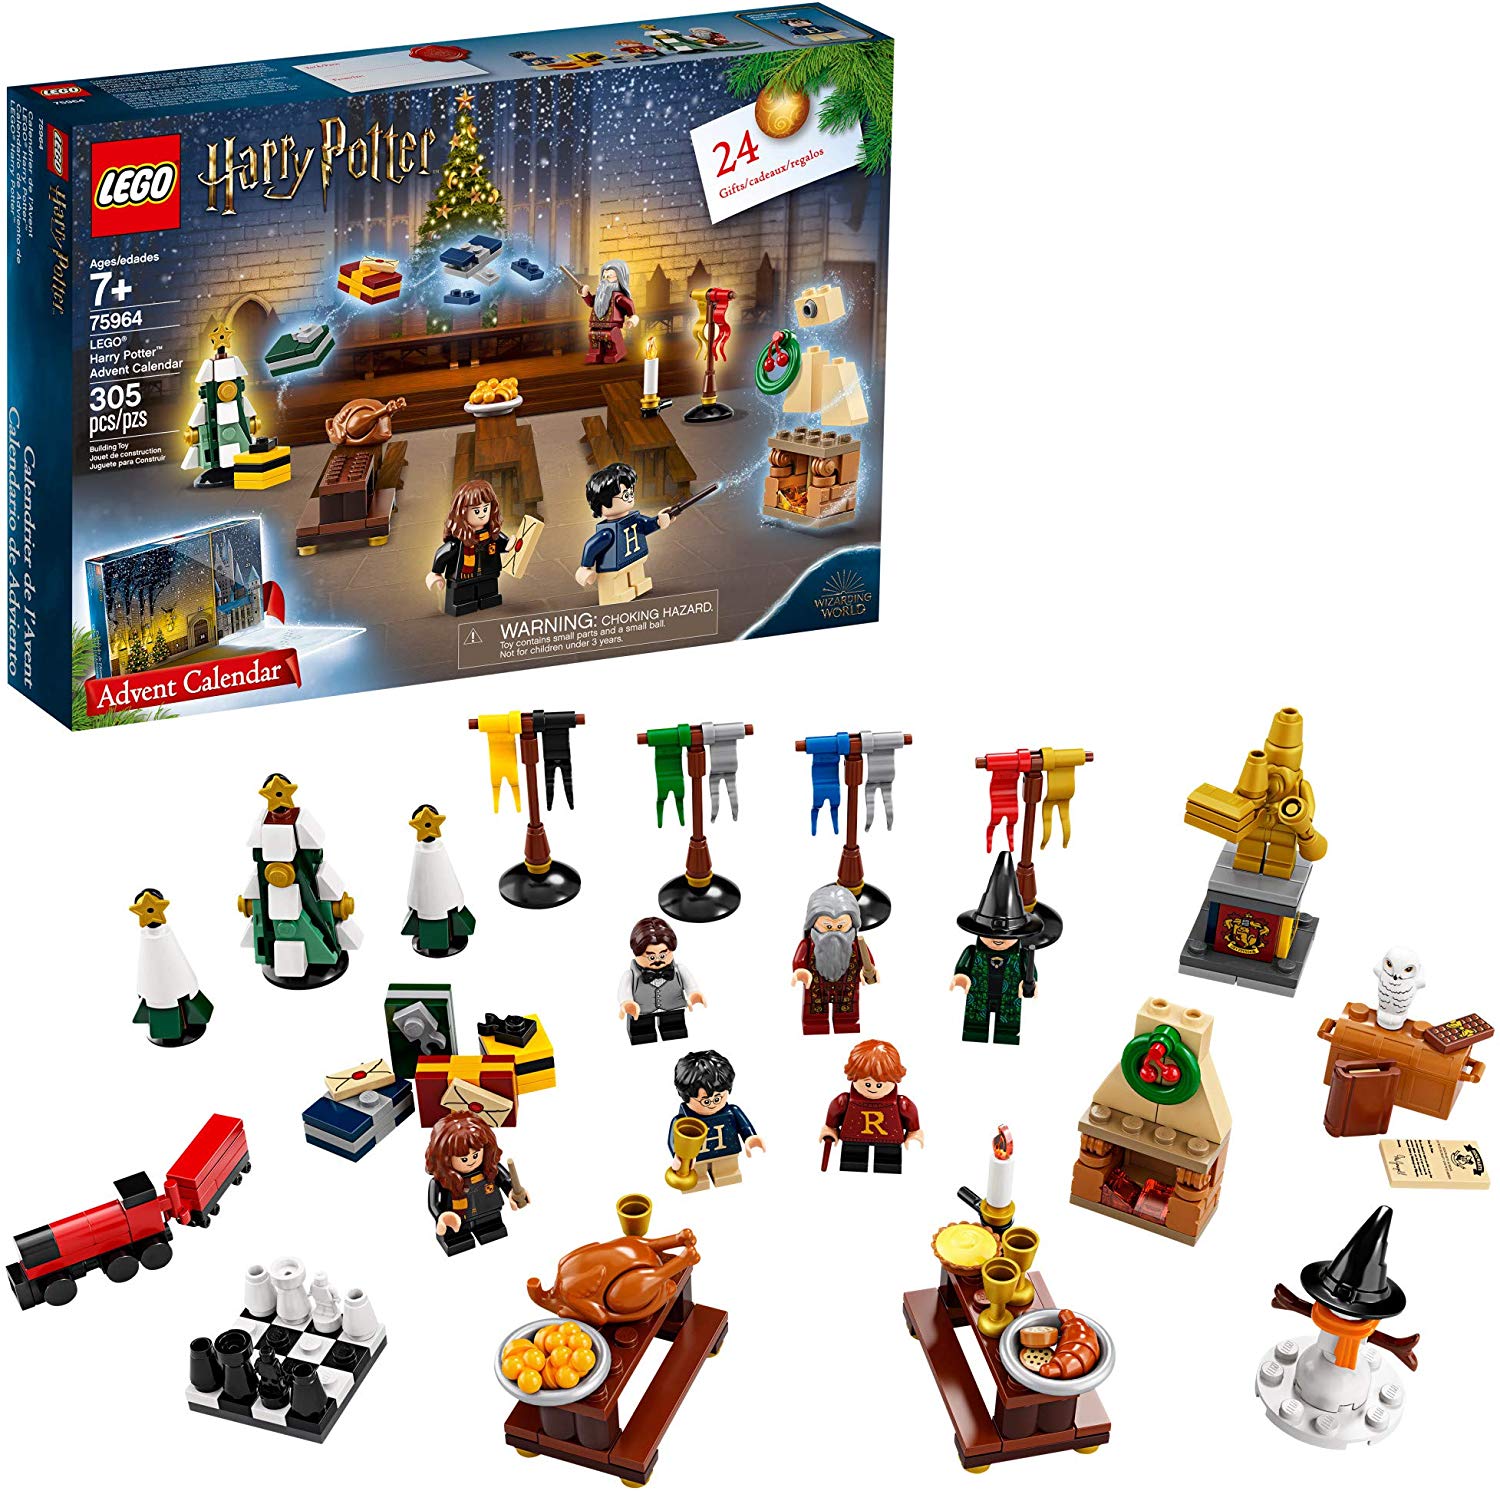 LEGO Harry Potter Advent Calendar Building Kit Only 32.99